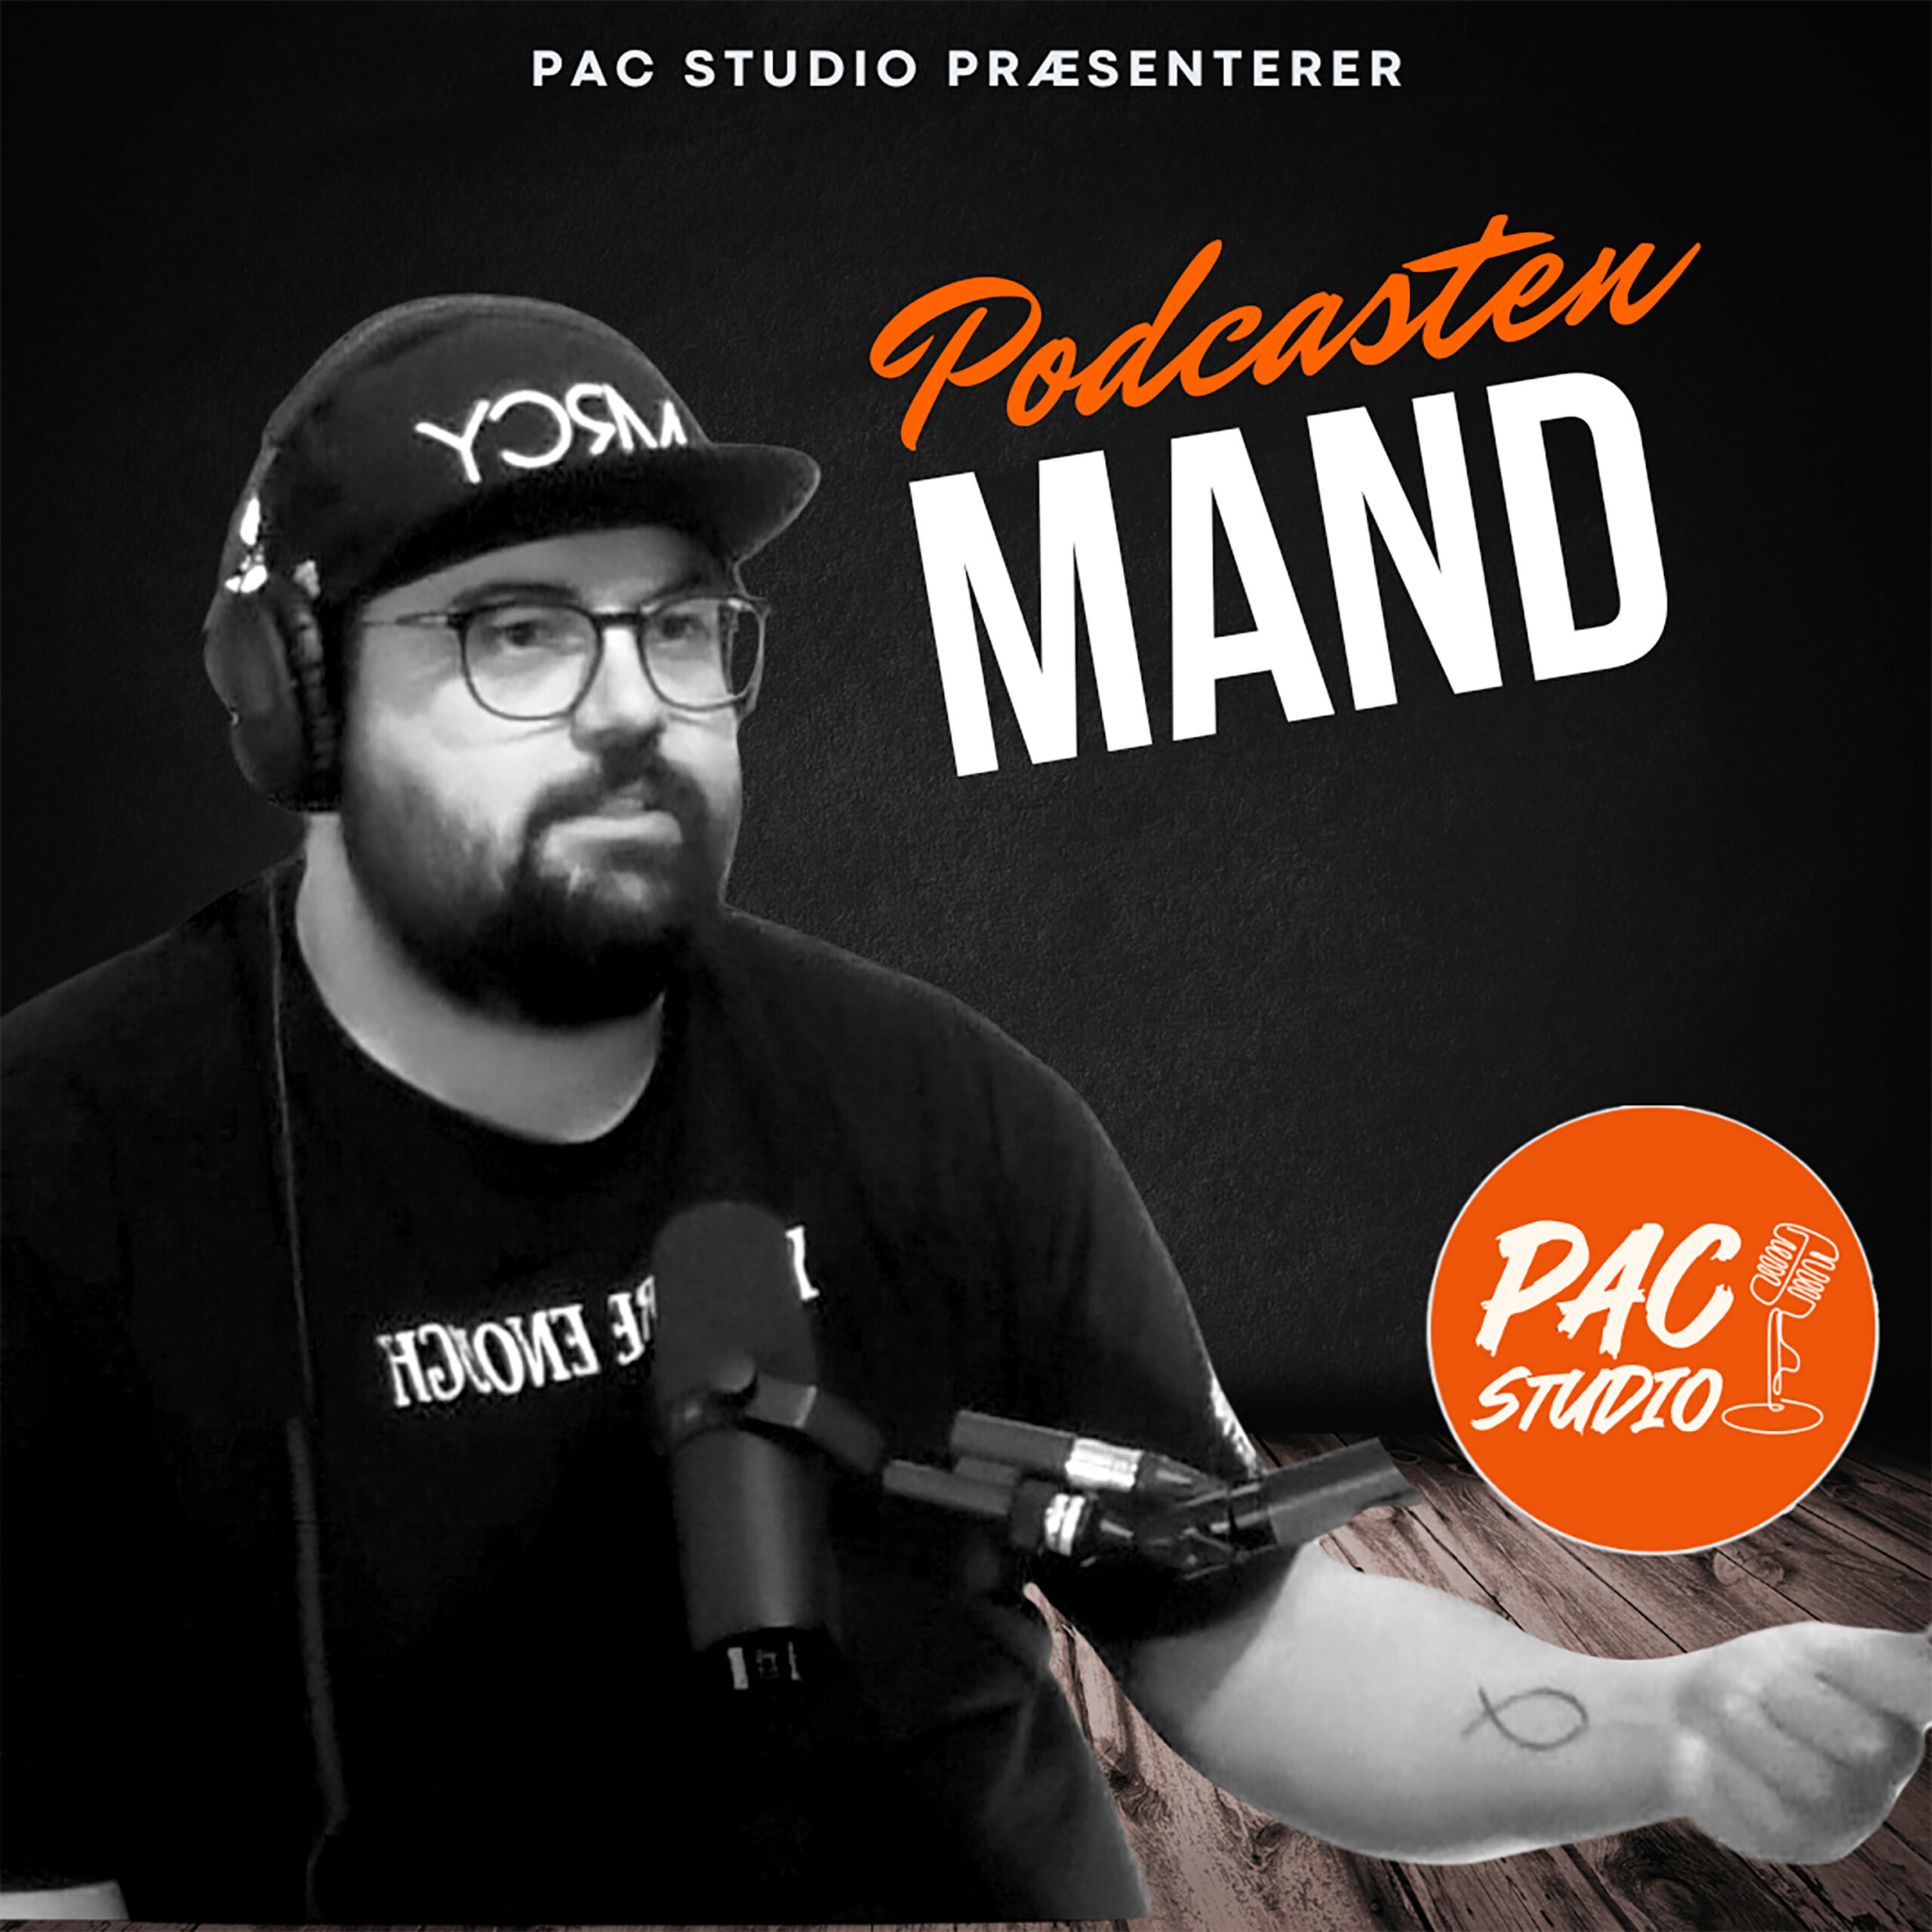 Podcasten MAND / Ulrick